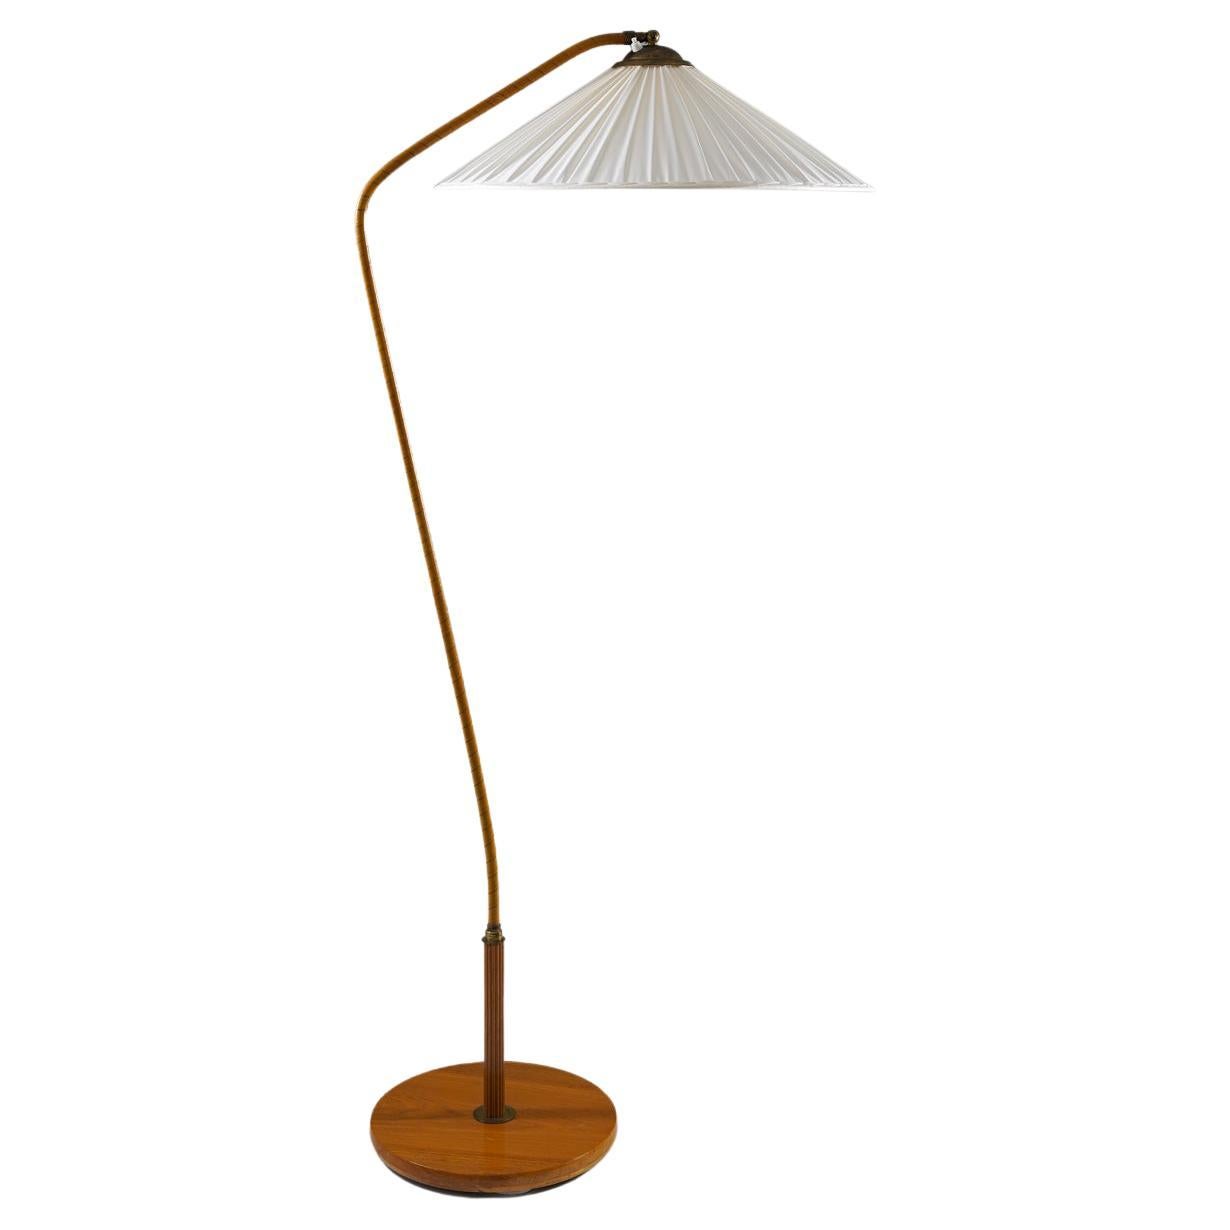 Swedish Modern Midcentury Floor Lamp, 1940s